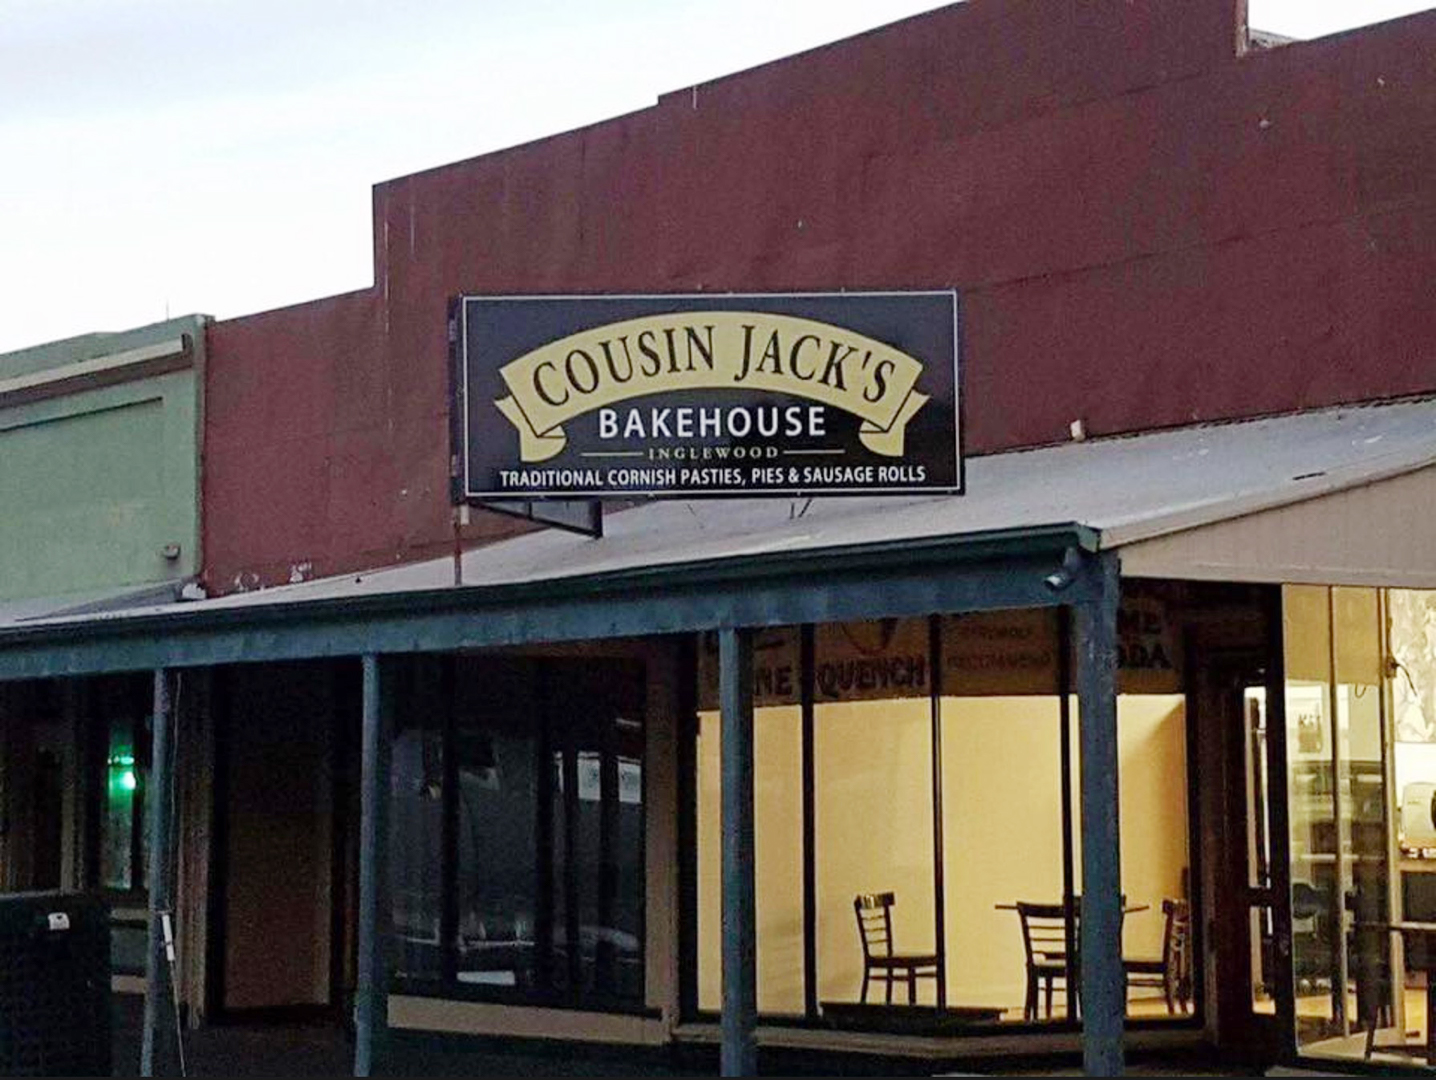 Cousin Jack's Bakehouse